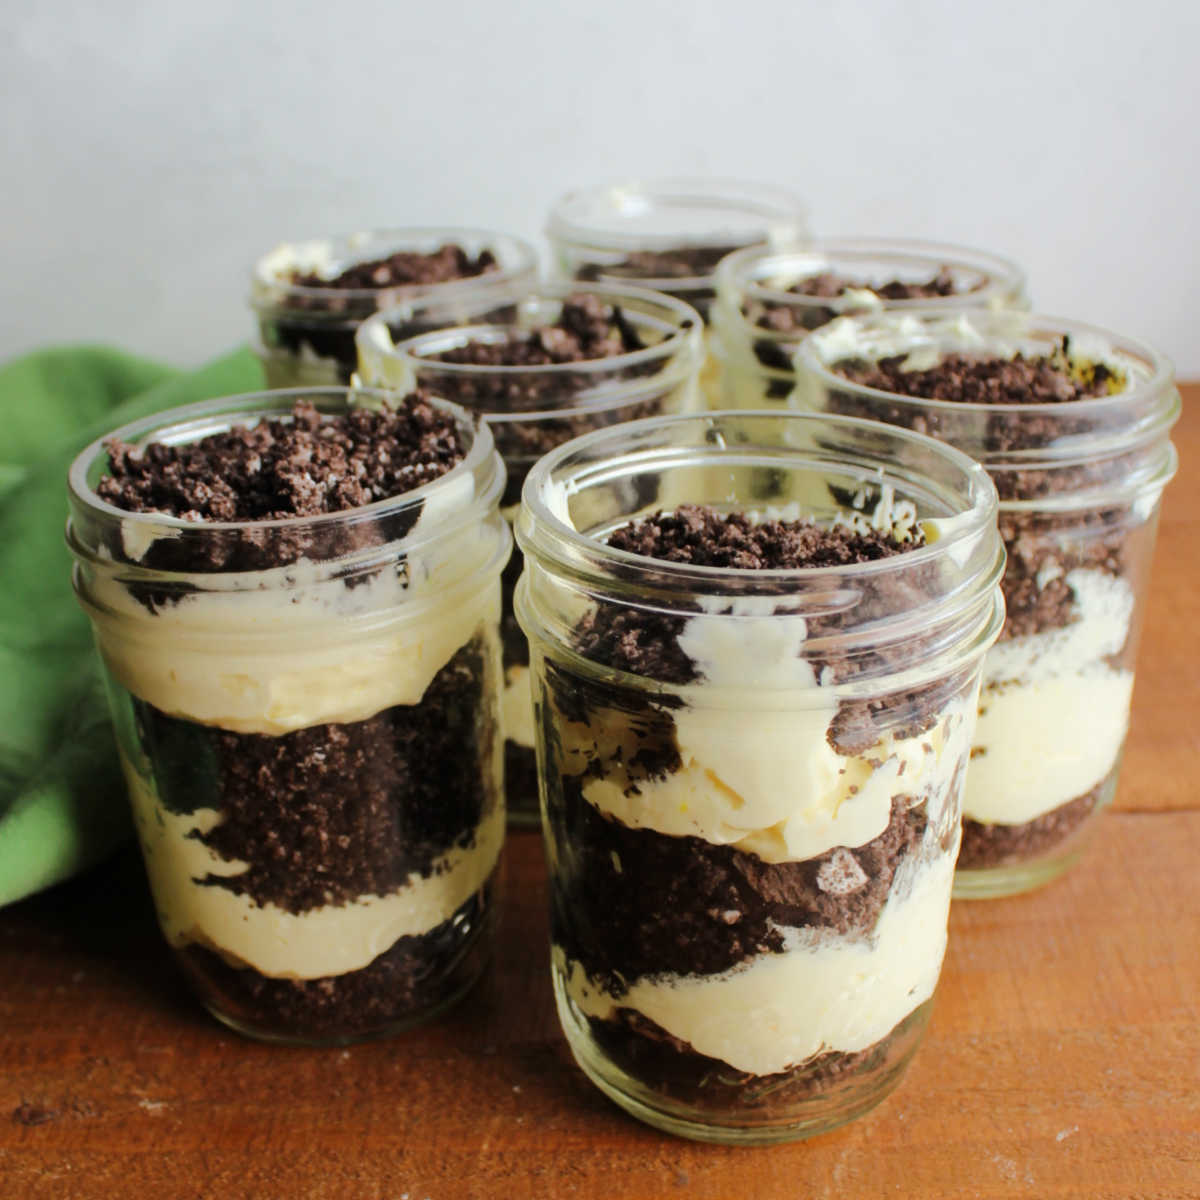 Layers of vanilla pudding mixture and chocolate oreo crumbs layered in jars to make dirt pudding.